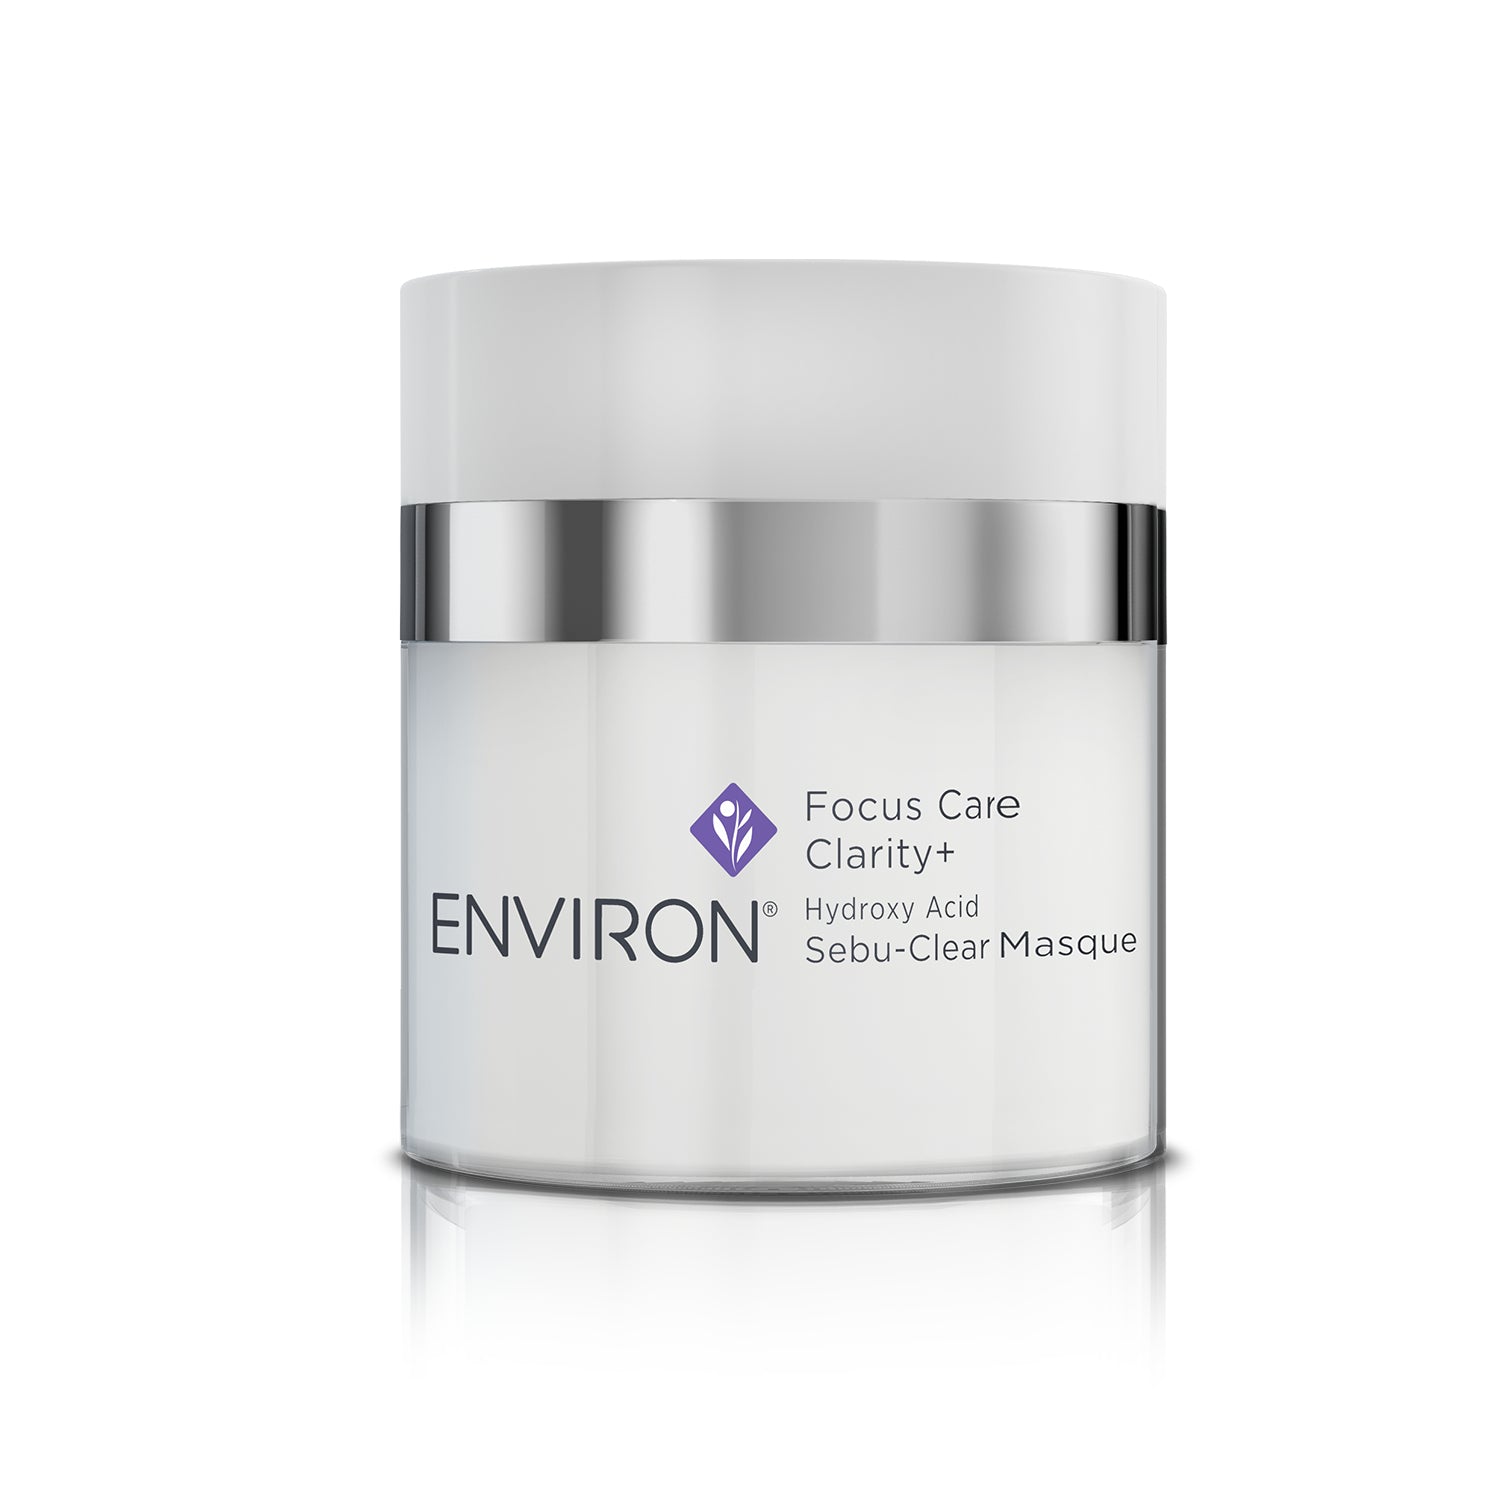 Environ Focus Care™ Clarity+ range Hydroxy Acid Sebu-Clear Masque